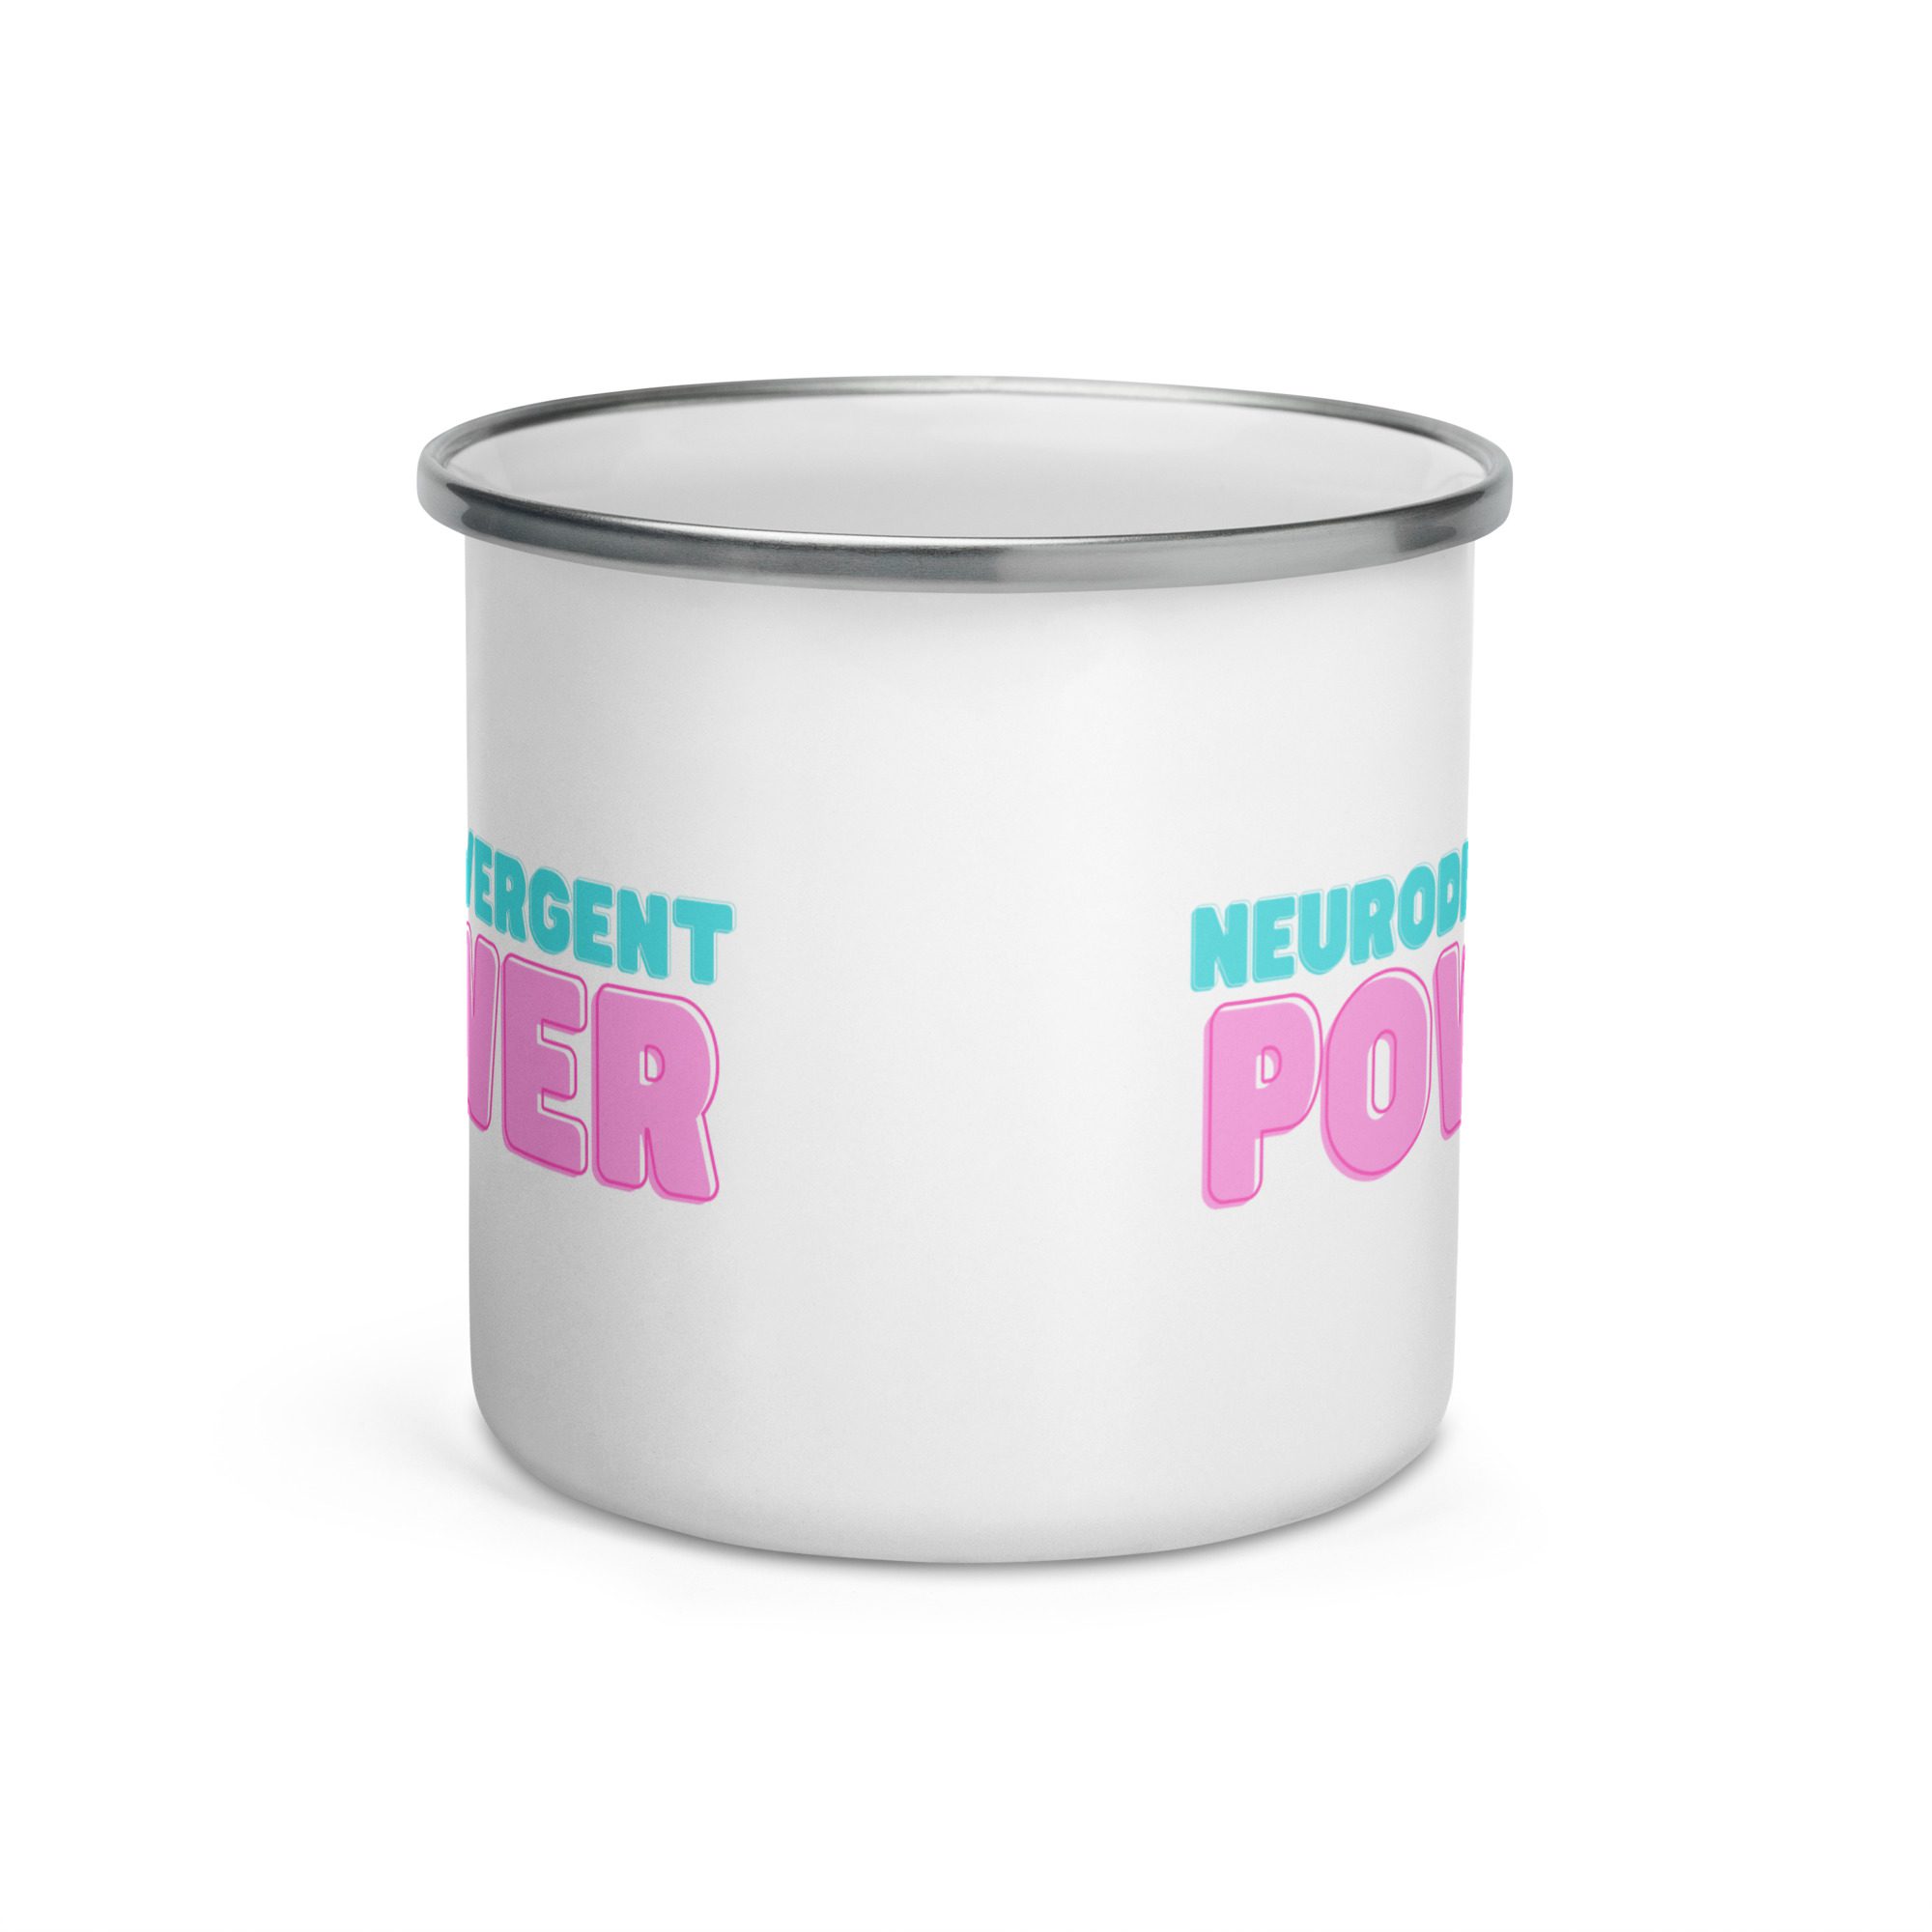 Neurodivergent Power Enamel Mug